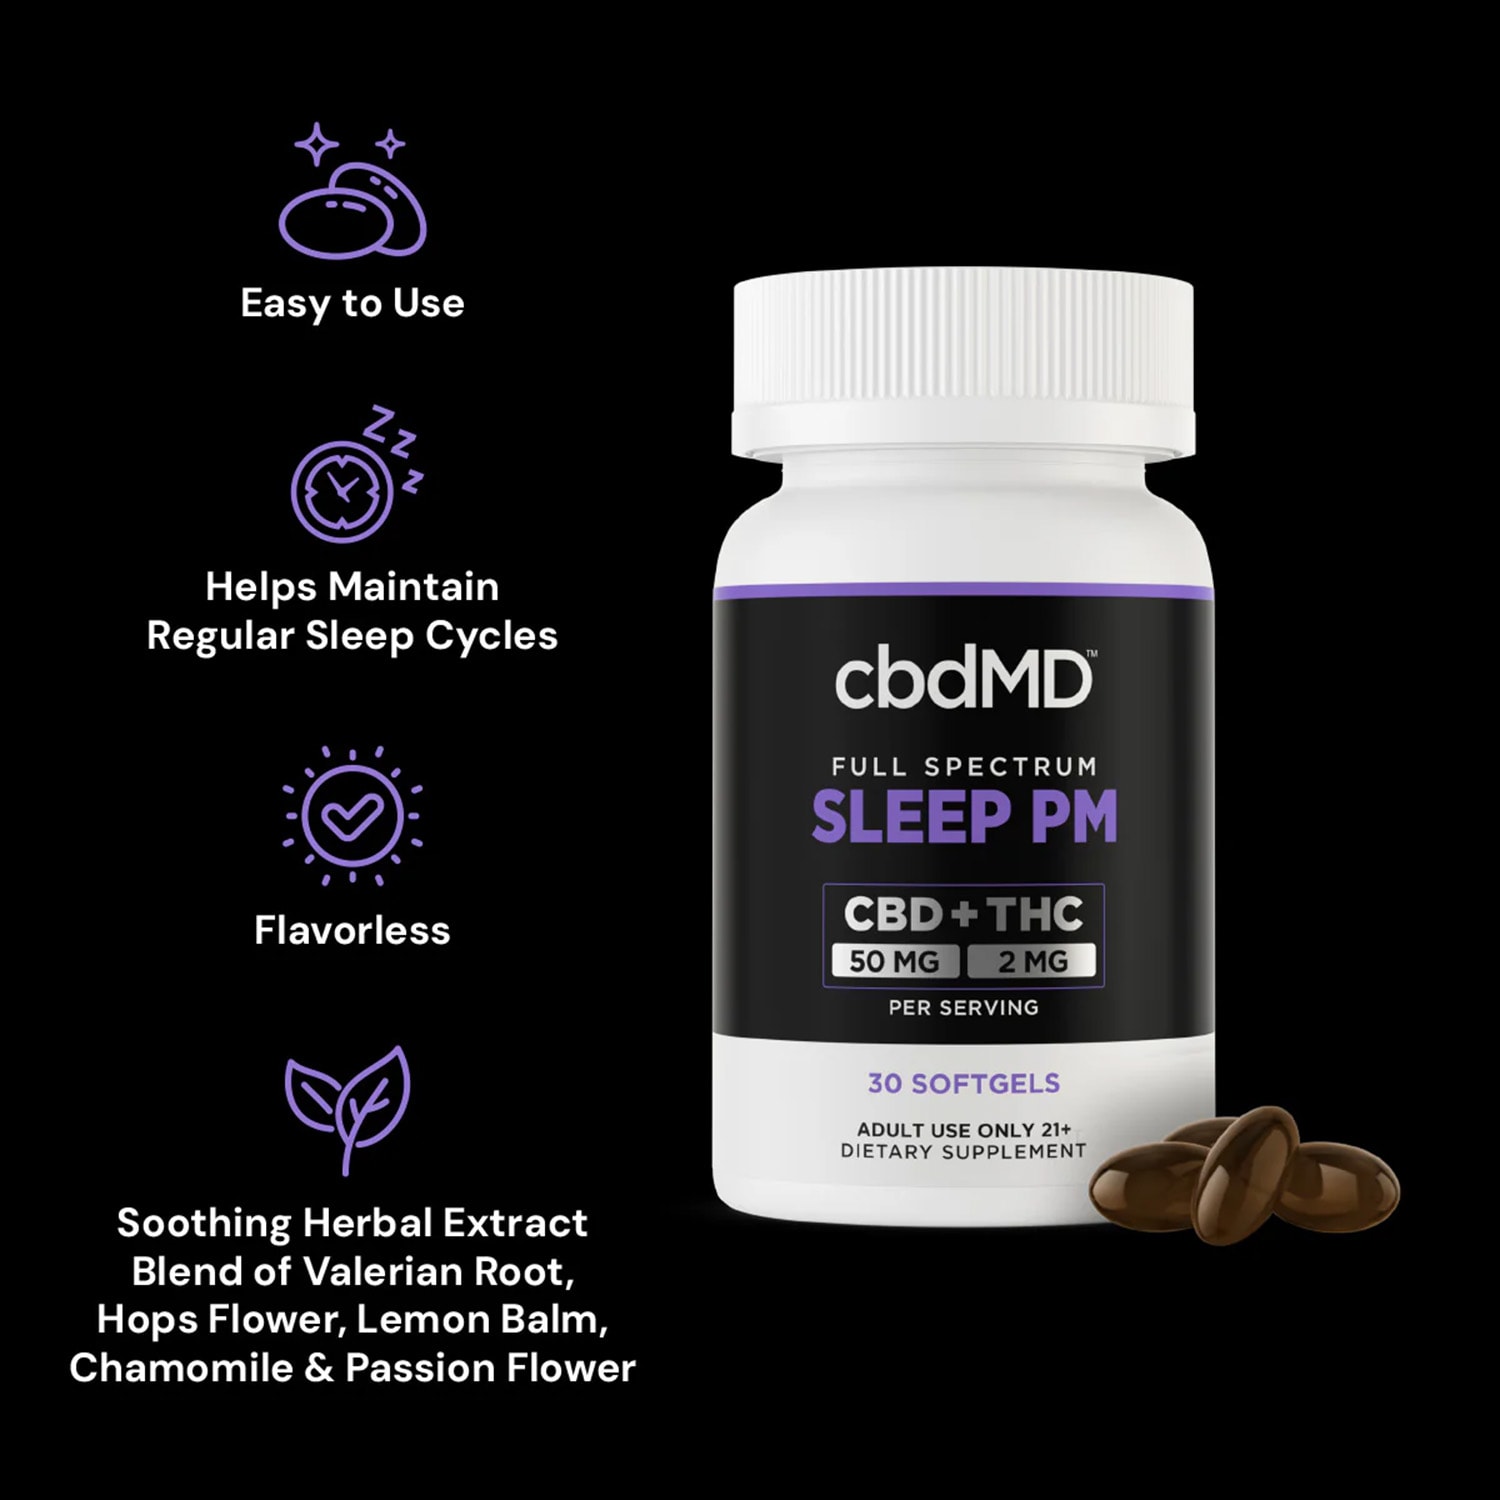 cbdMD, CBD Softgels Sleep PM, Full Spectrum, 30ct, 1500mg CBD